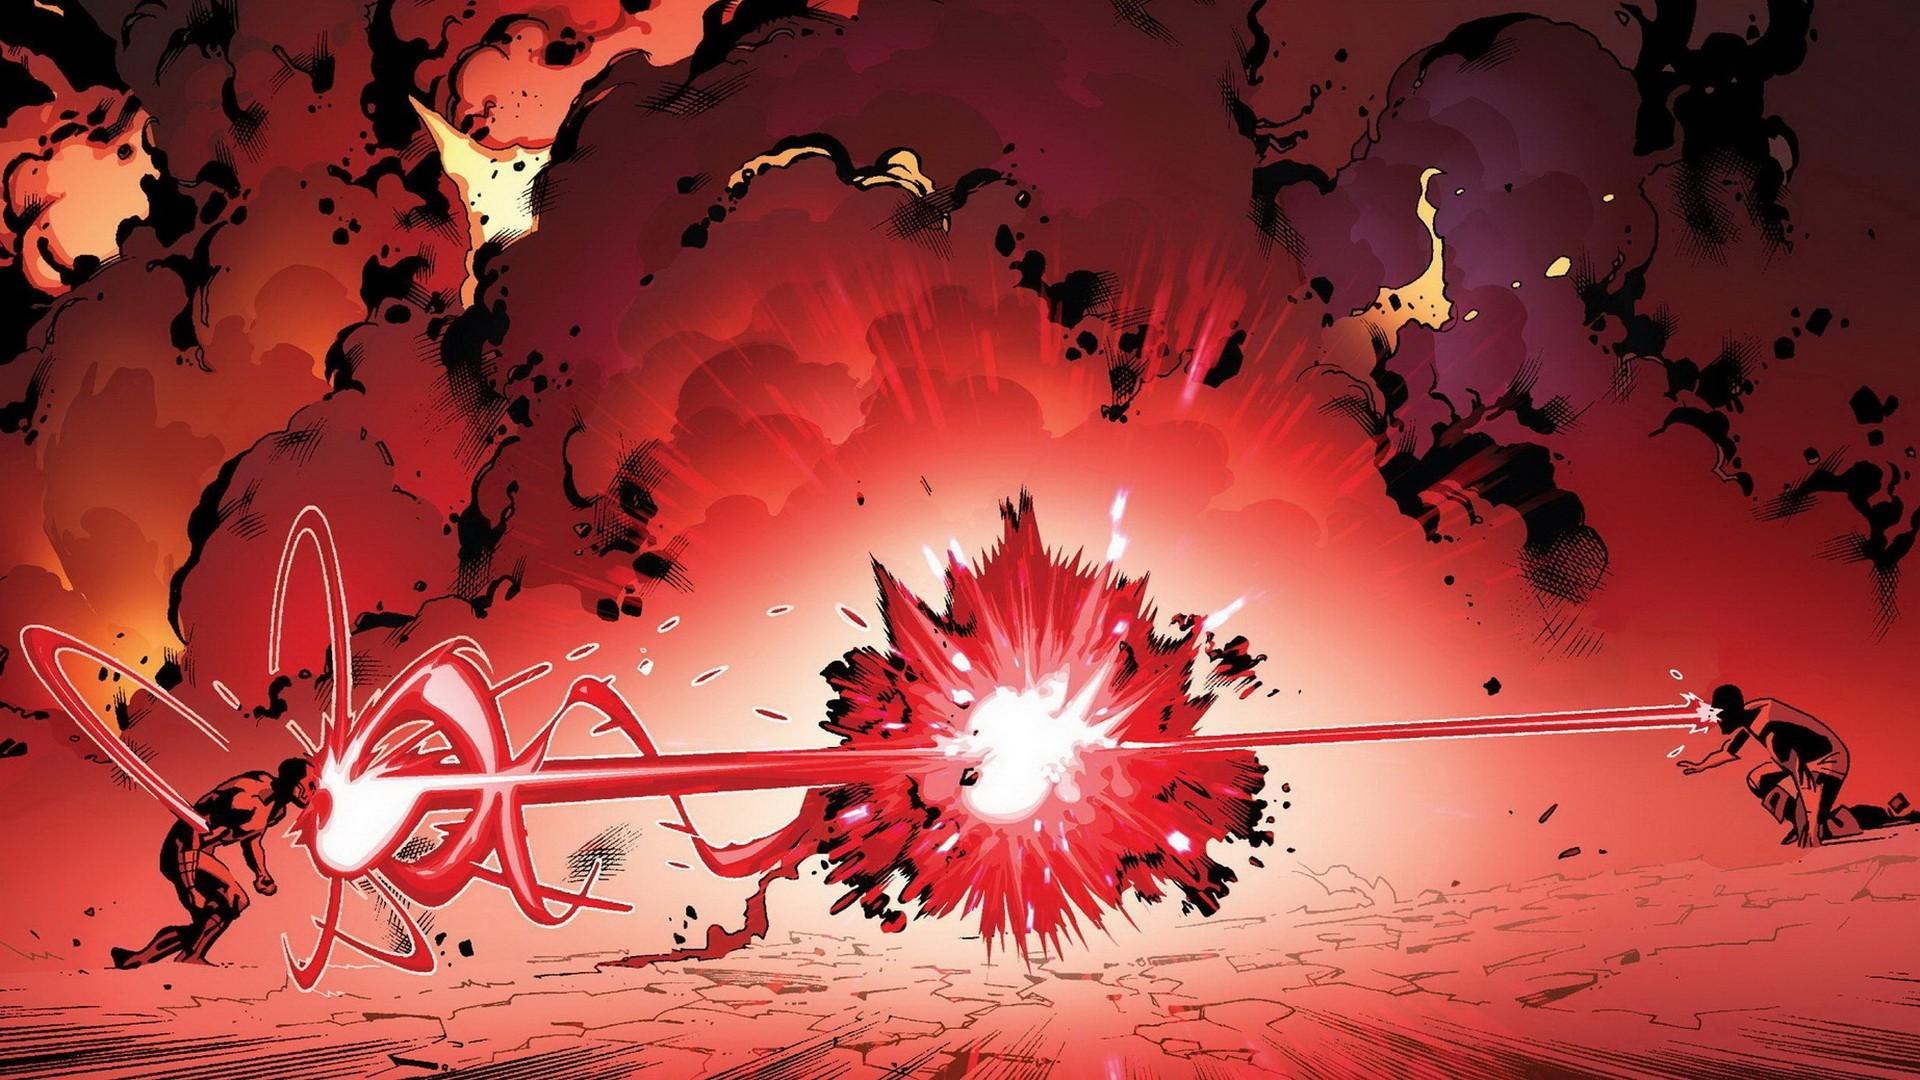 Red comics explosions fight marvel cyclops scott summers wallpaper